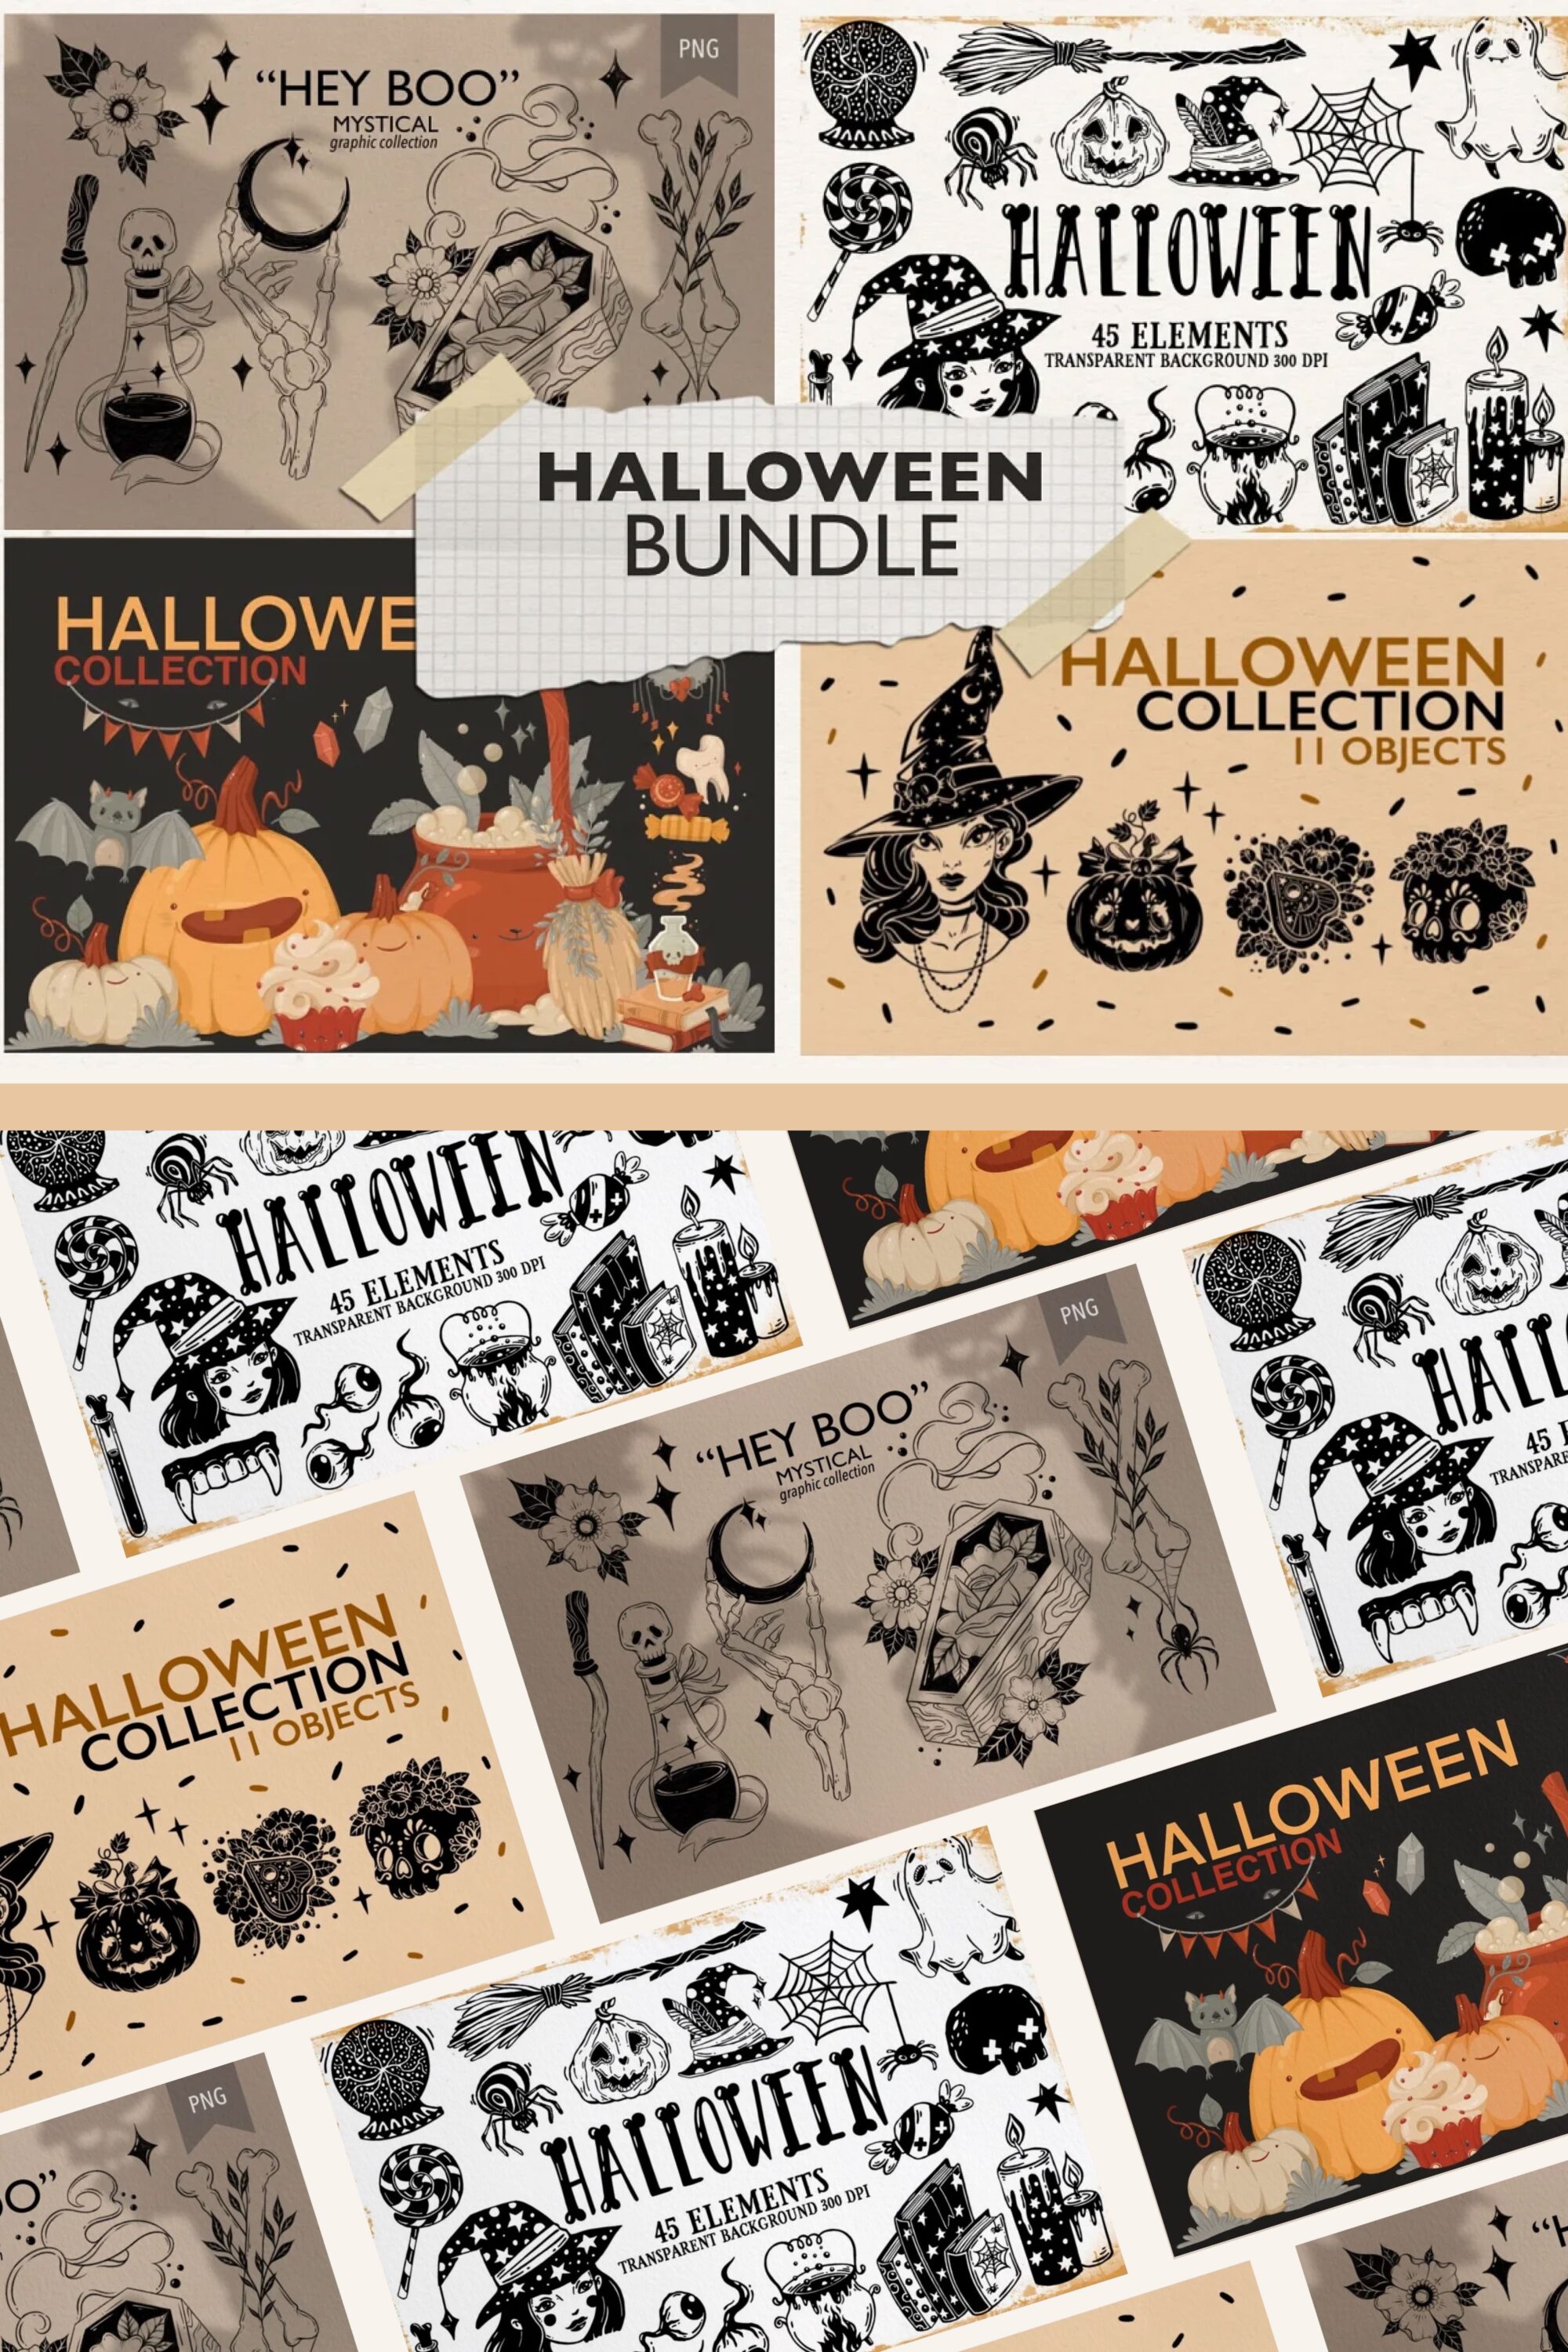 Illustration with Halloween elements.